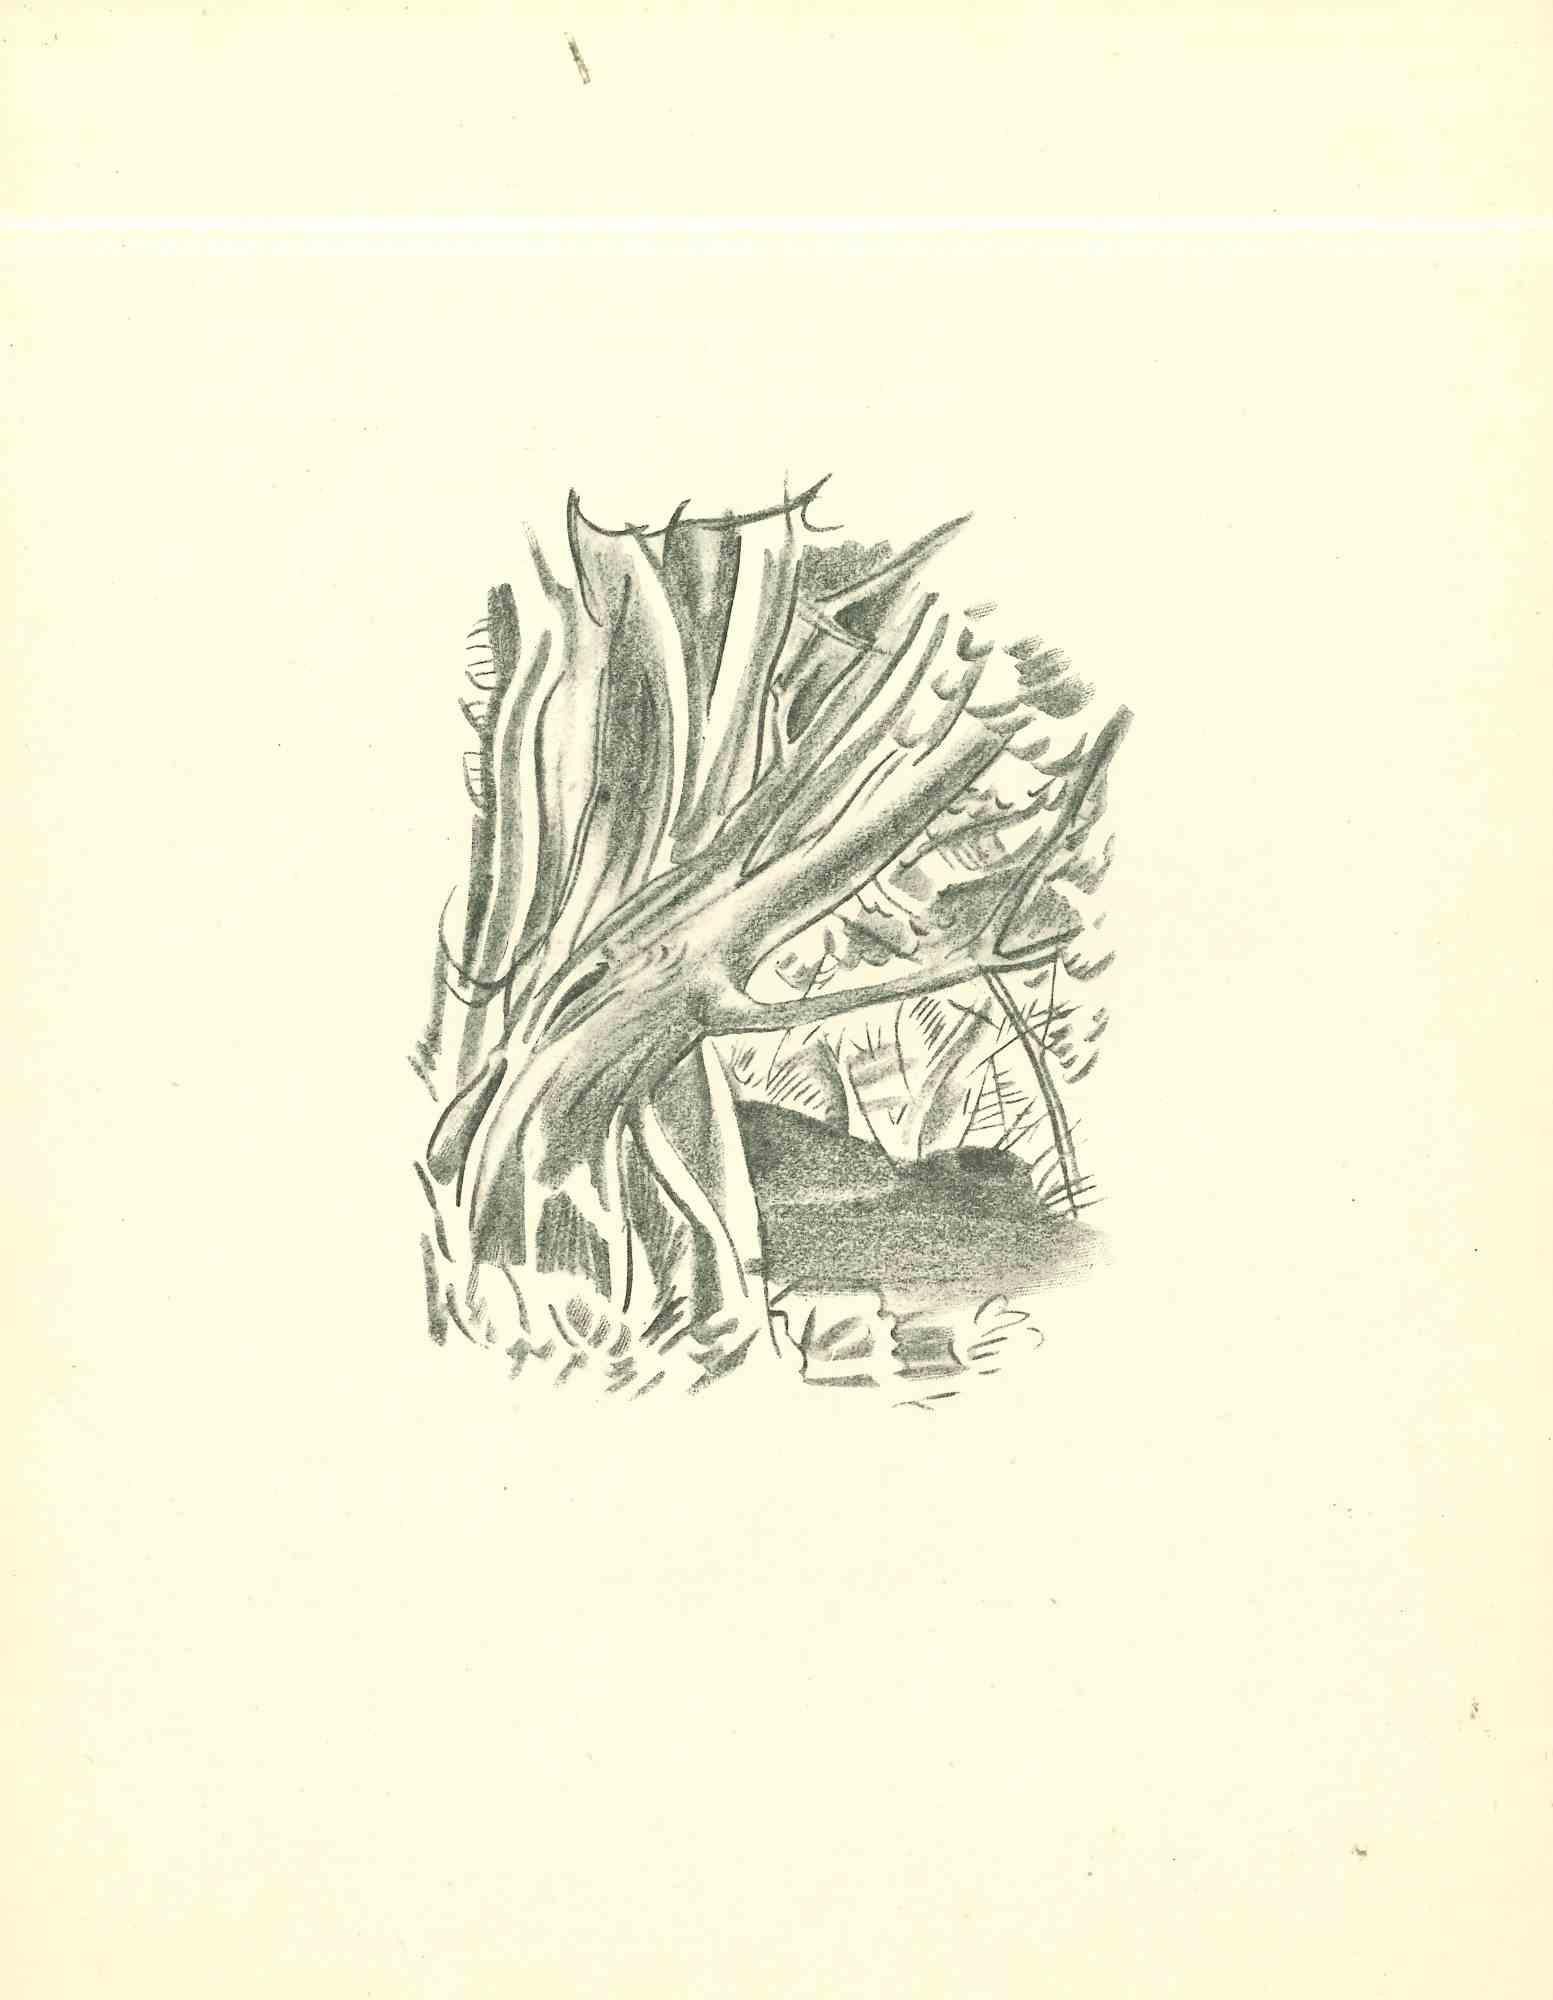 African Forest  - Original Lithograph by Emmanuel Gondouin - 1930s